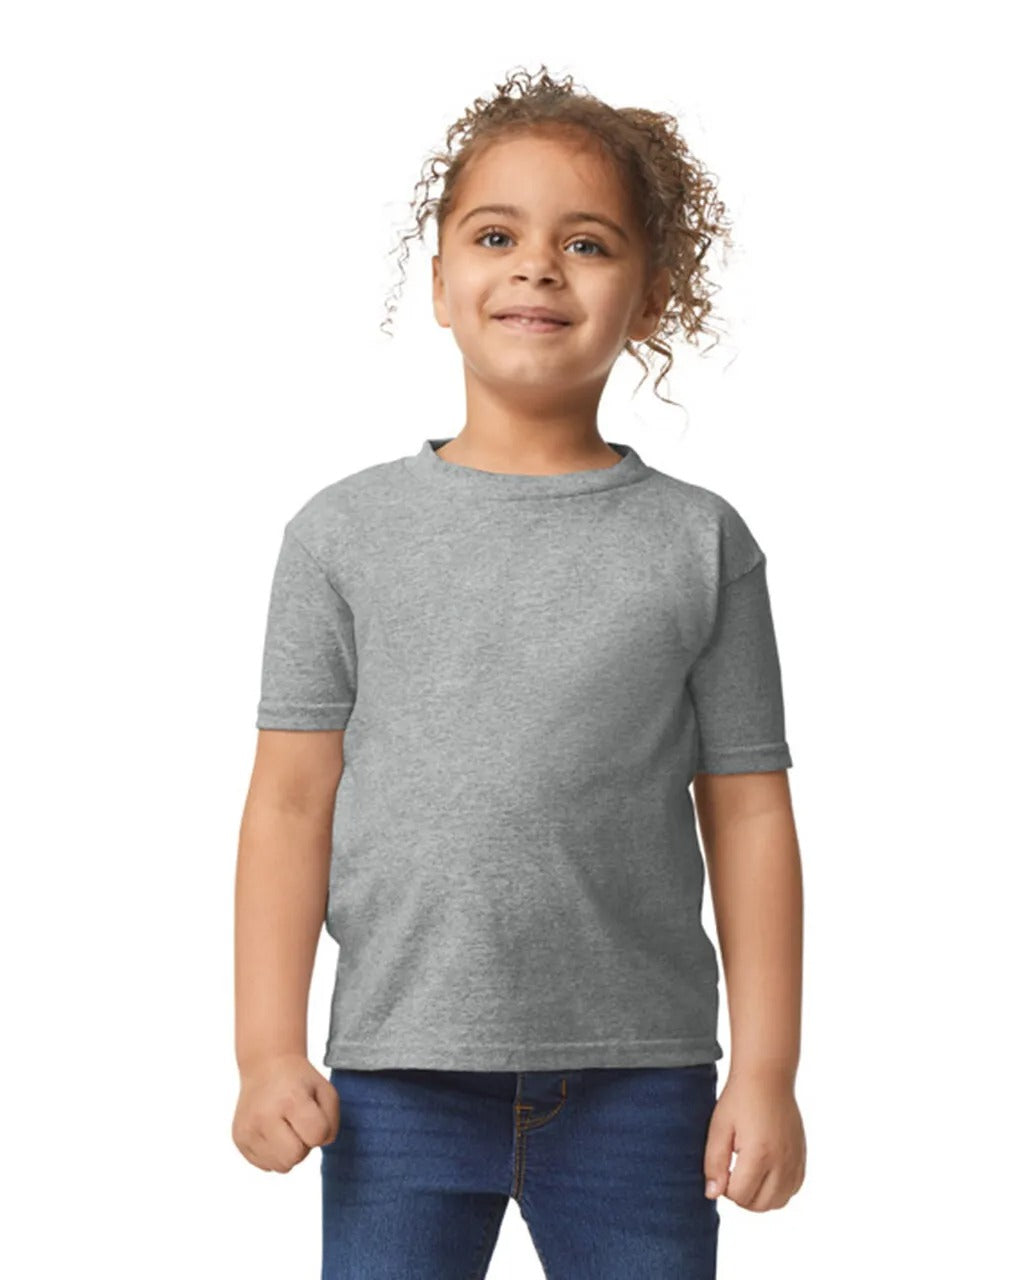 Toddlers Tshirt - Sports Grey